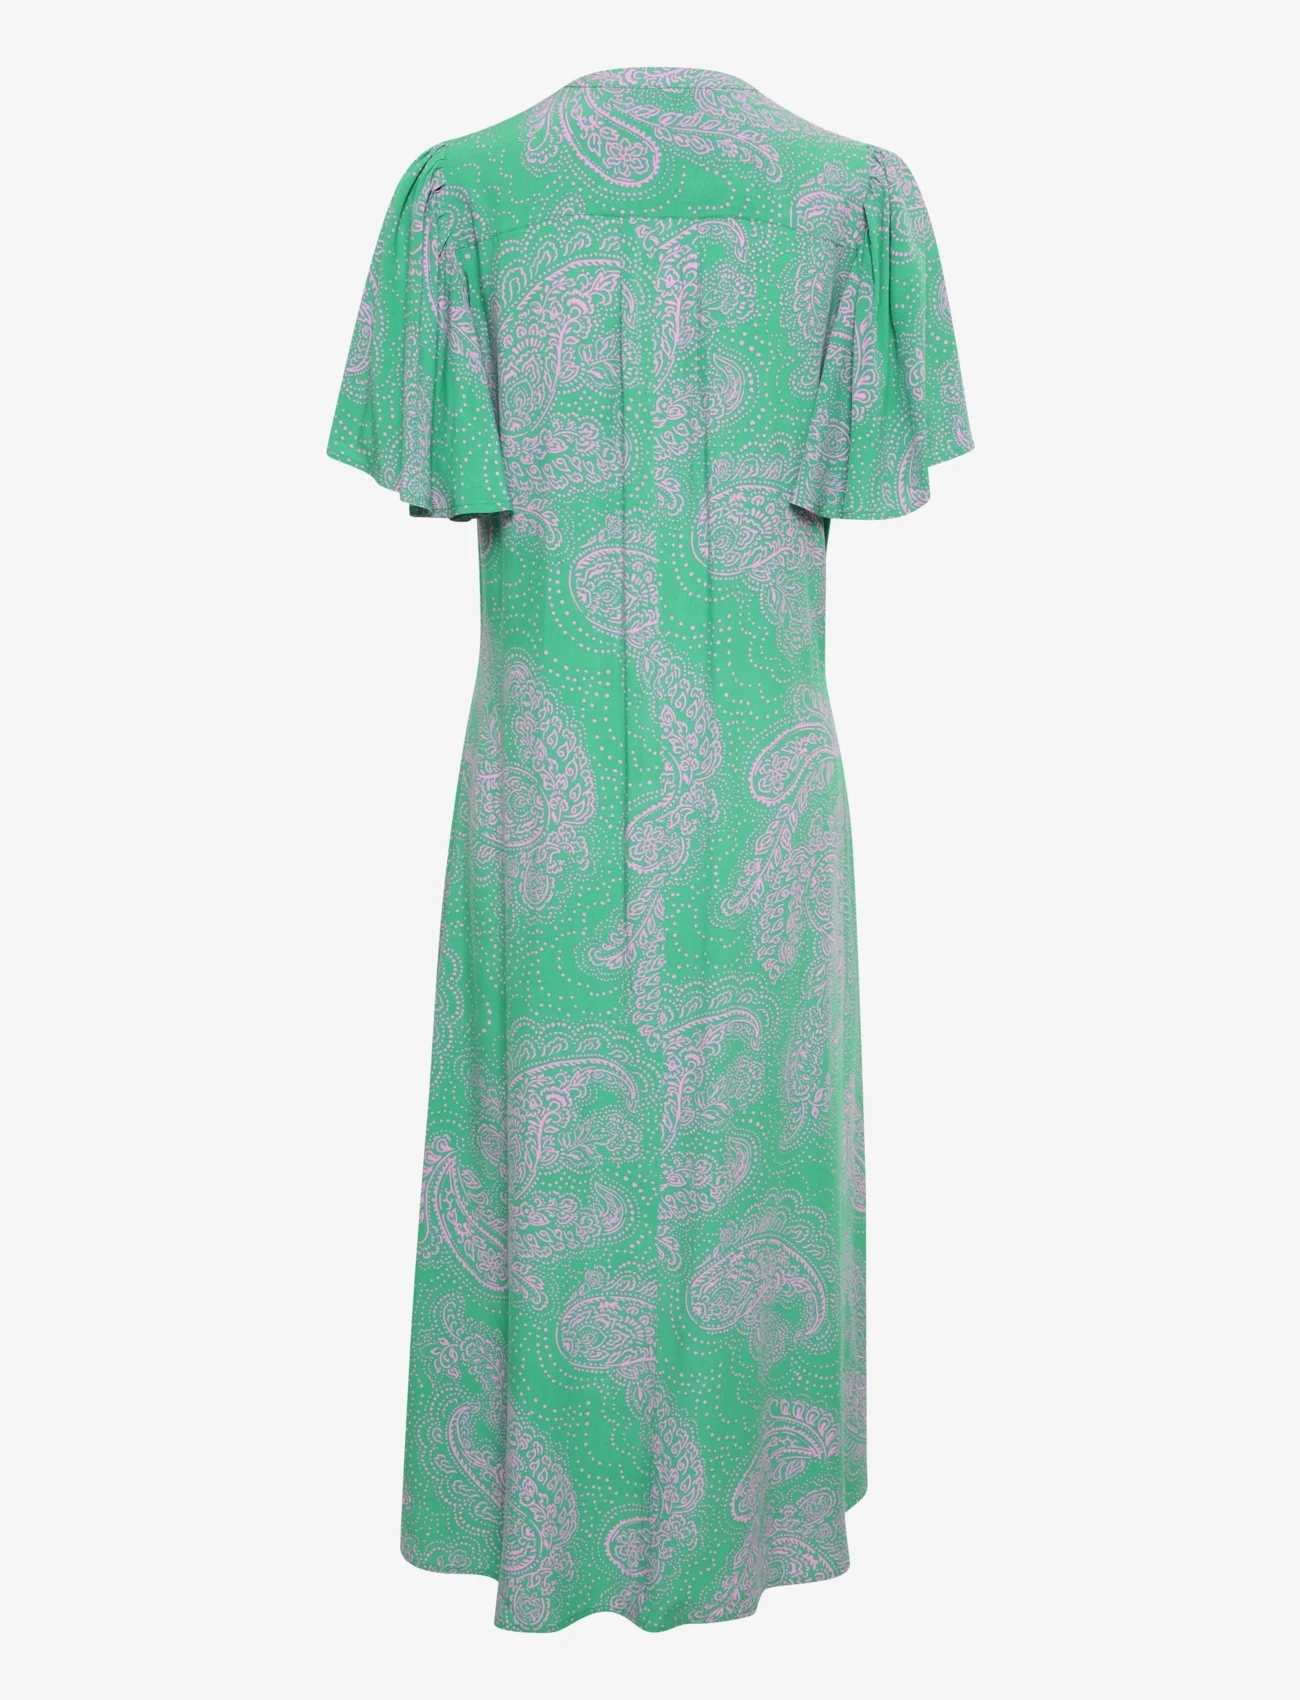 Culture - CUpolly Long Dress - sommerkjoler - green/pink paisley - 1